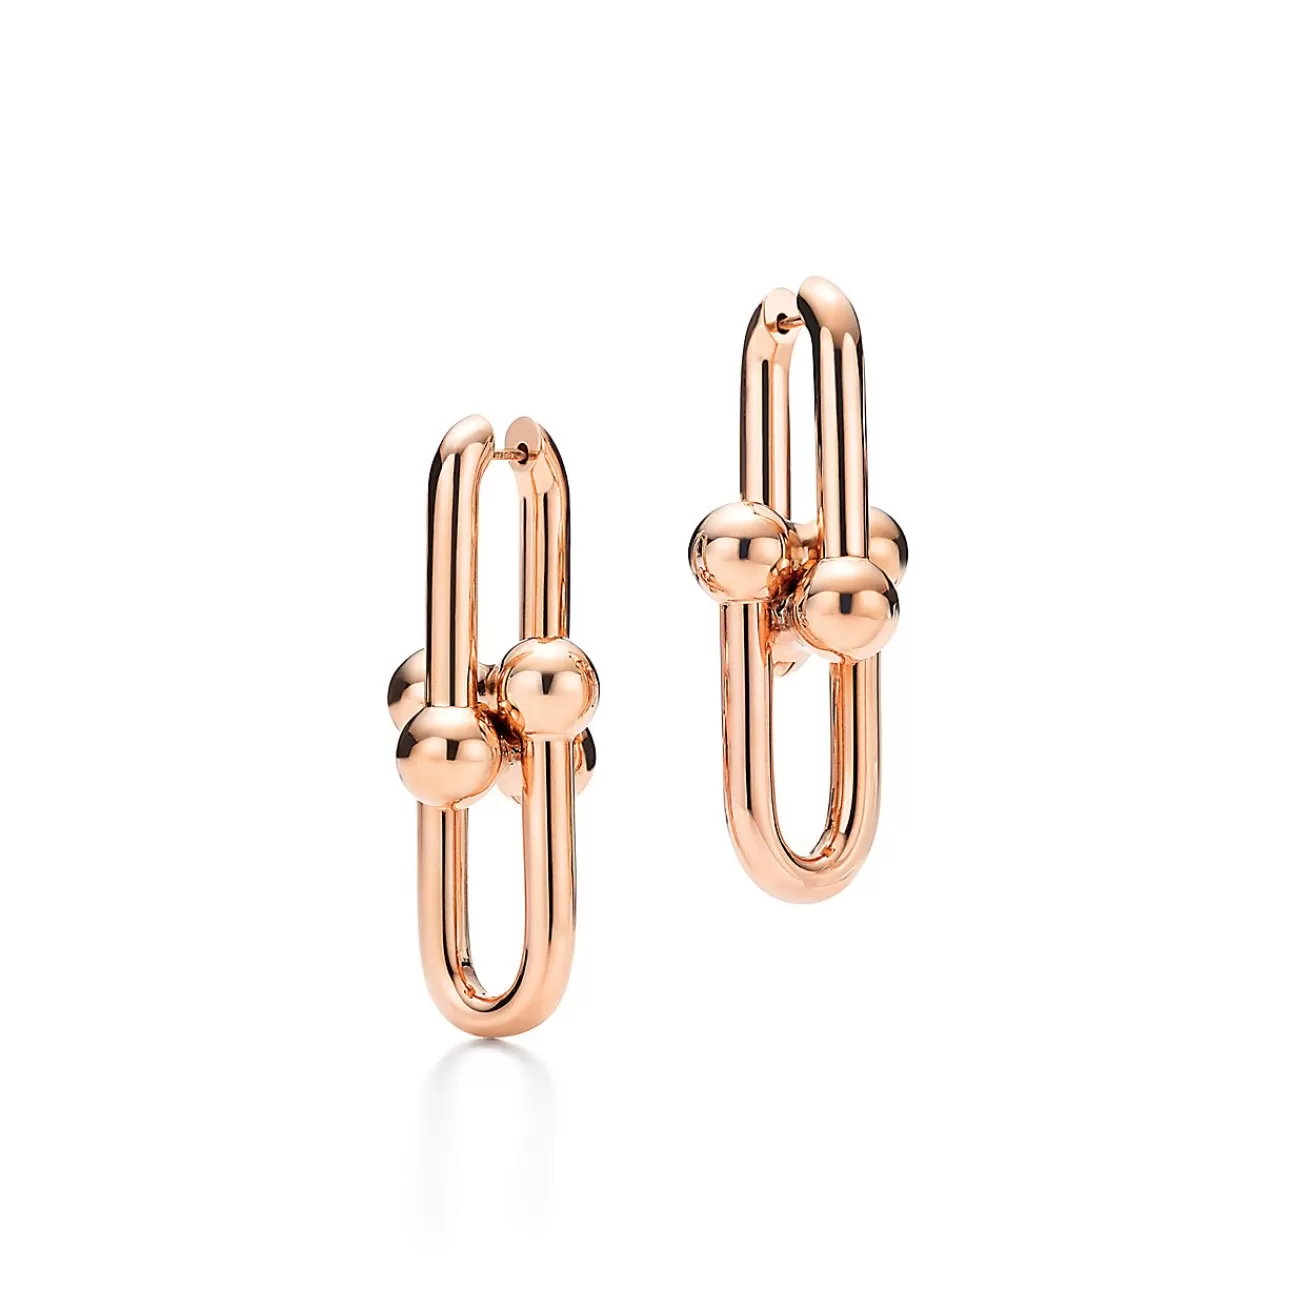 Tiffany & Co. Tiffany HardWear Extra Large Link Earrings in Rose Gold | ^ Earrings | Tiffany HardWear